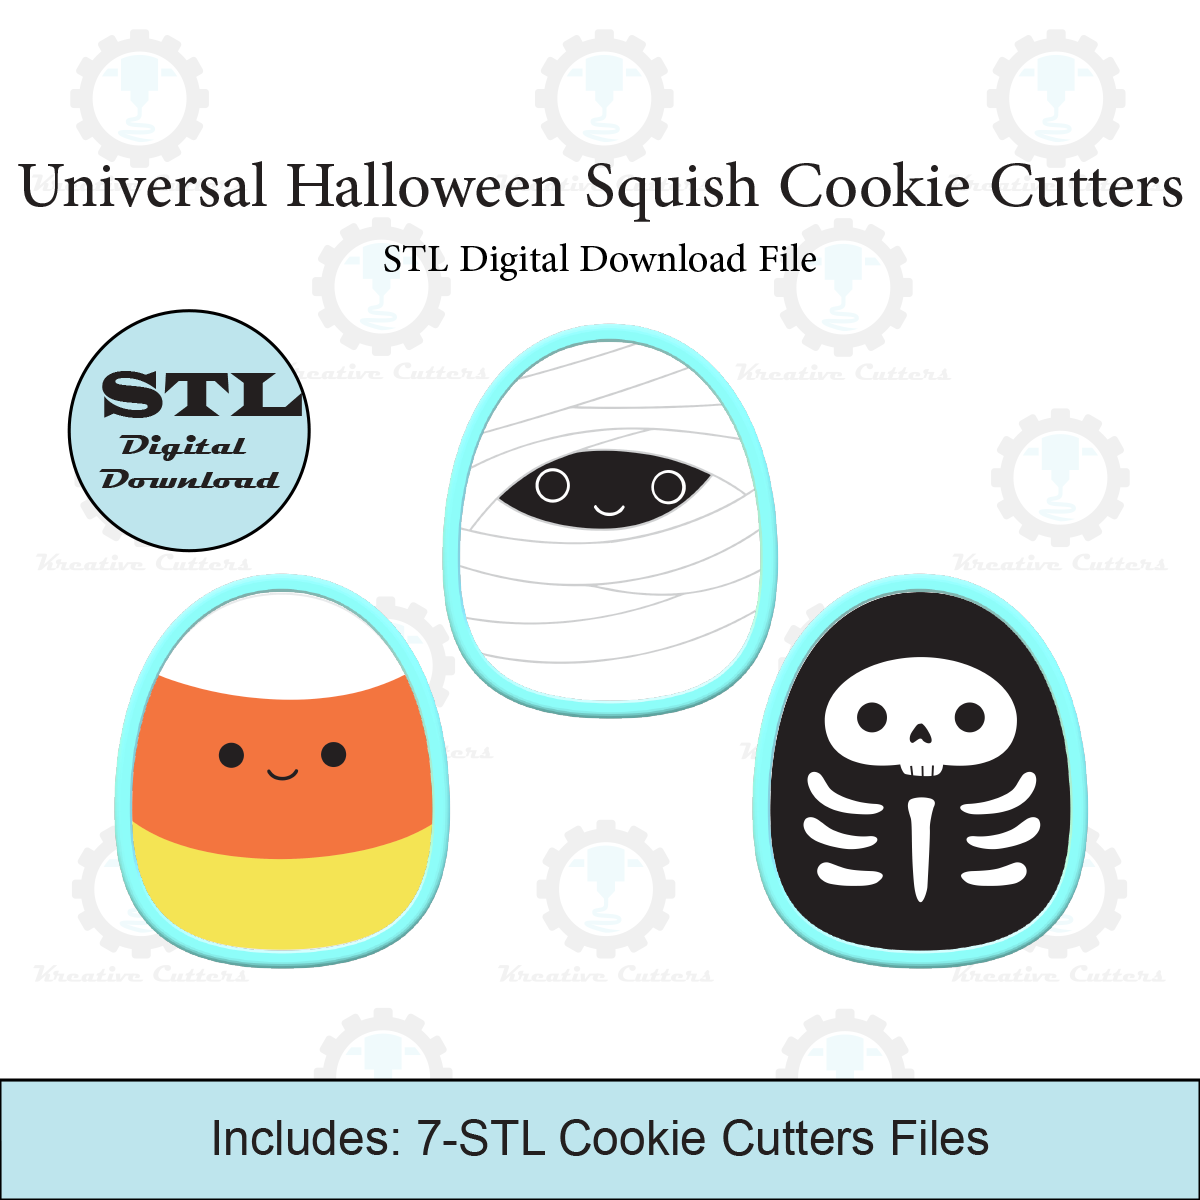 Universal Halloween Squish Cookie Cutter | STL File